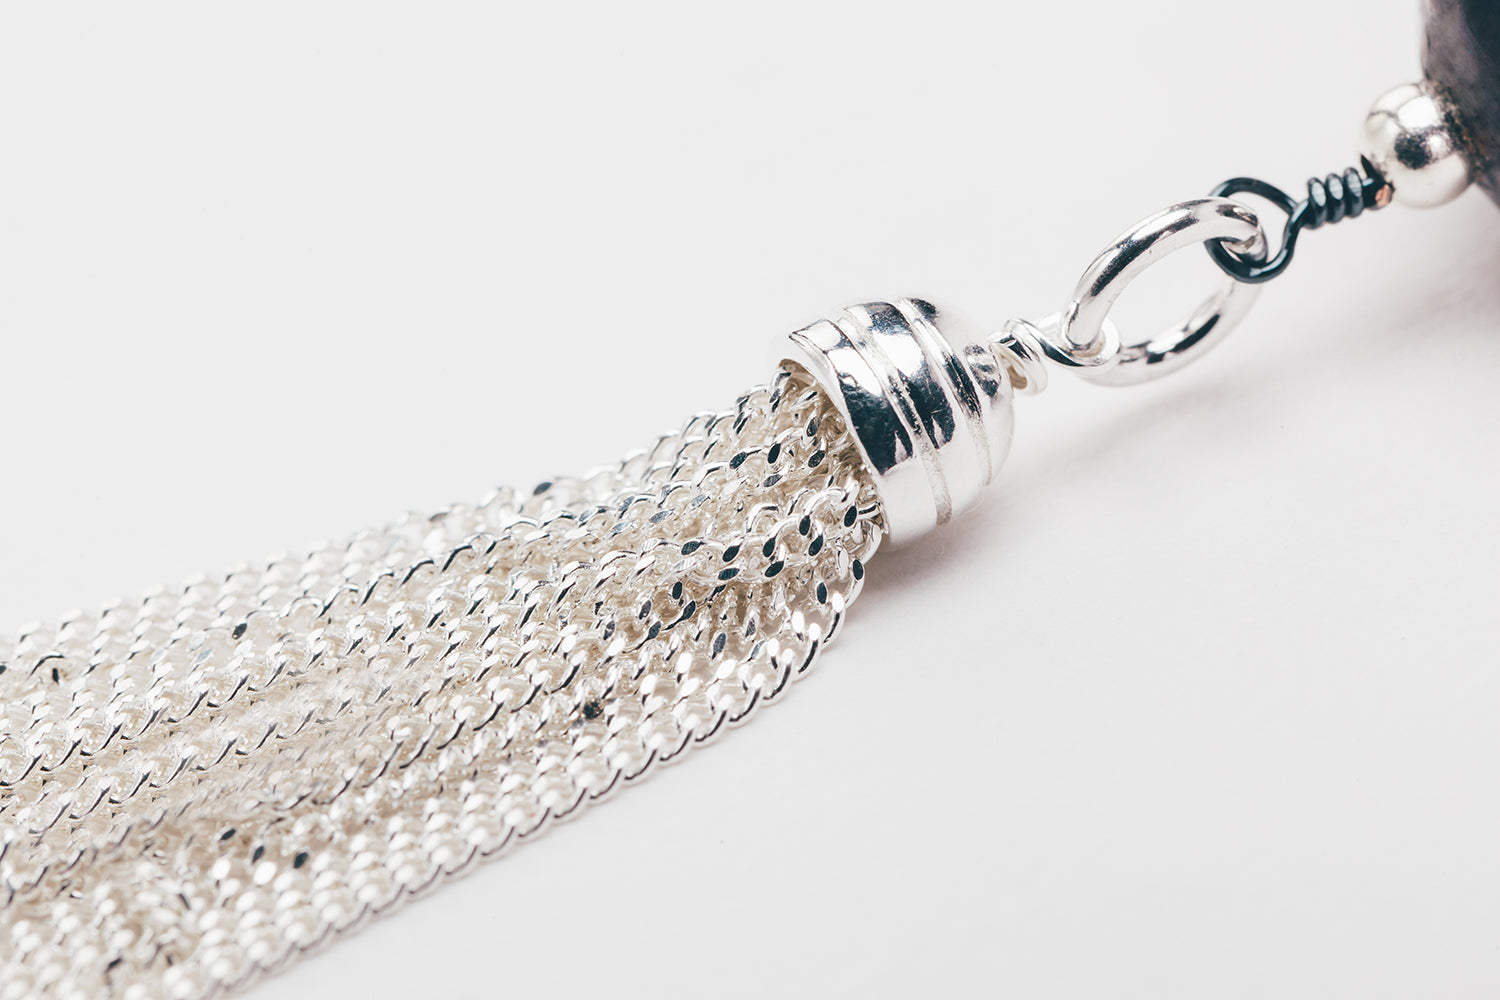 Sterling Silver Tassel Necklace